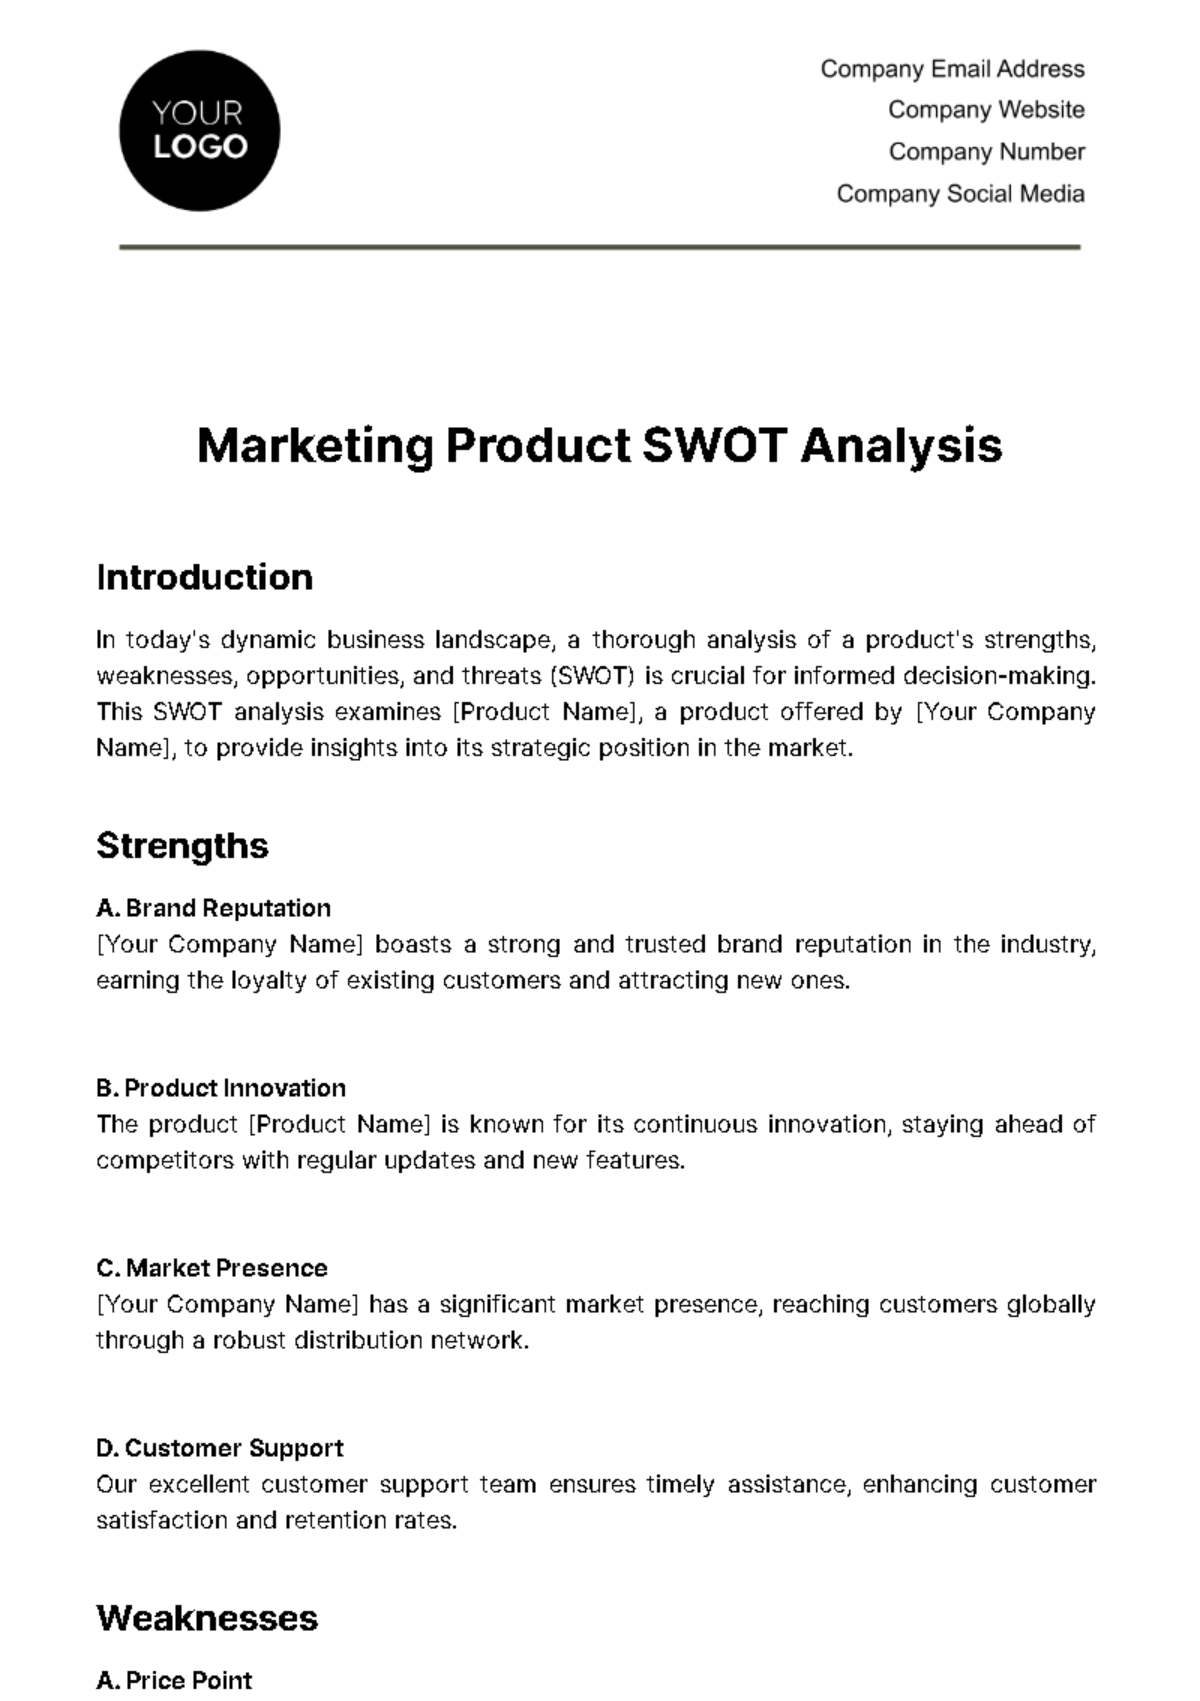 Marketing Product SWOT Analysis Template